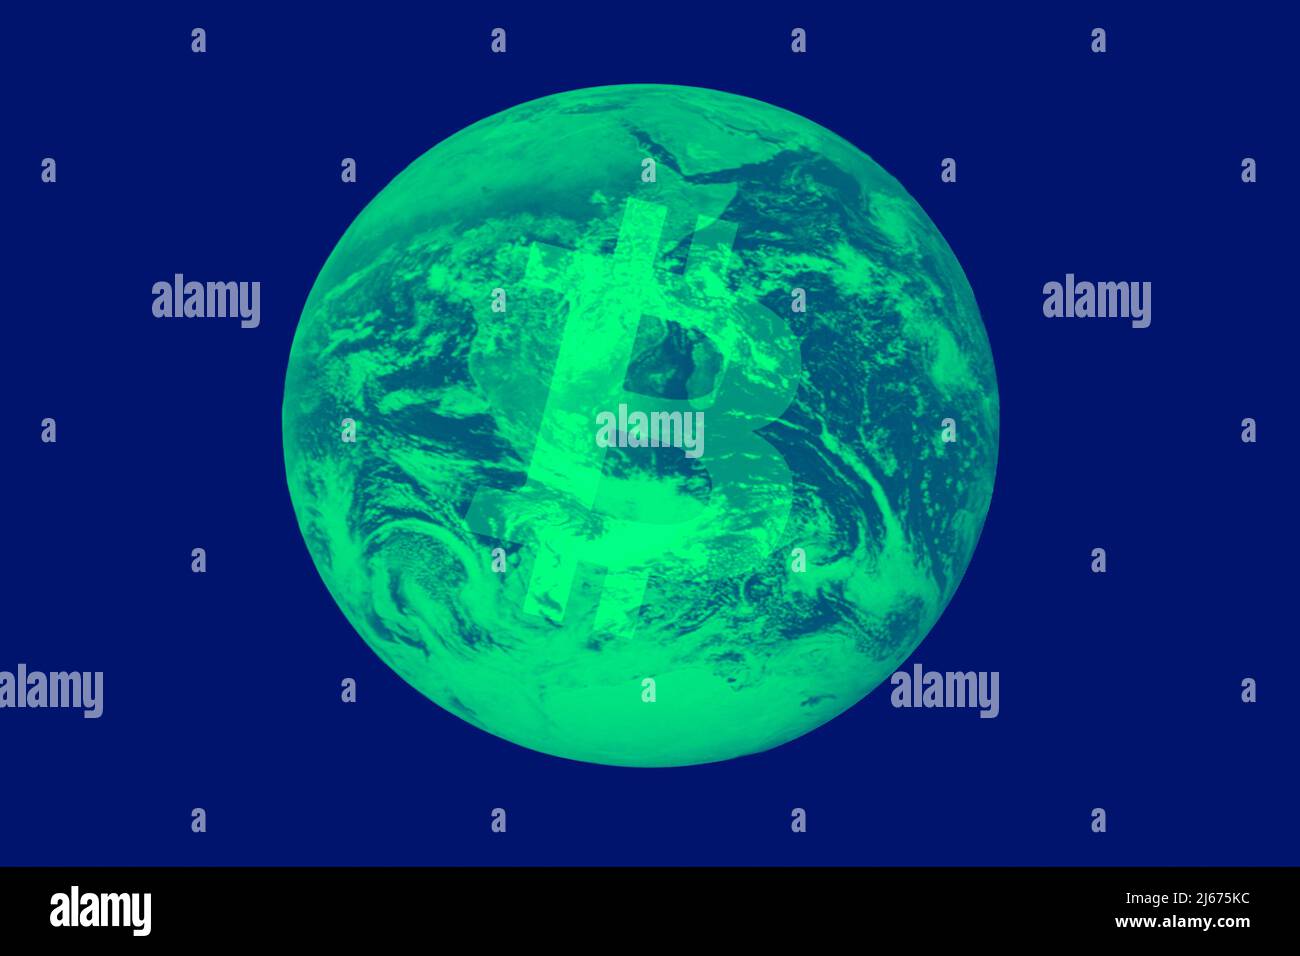 Creative pop conceptual illustration with Bitcoin logo and green earth globe Stock Photo